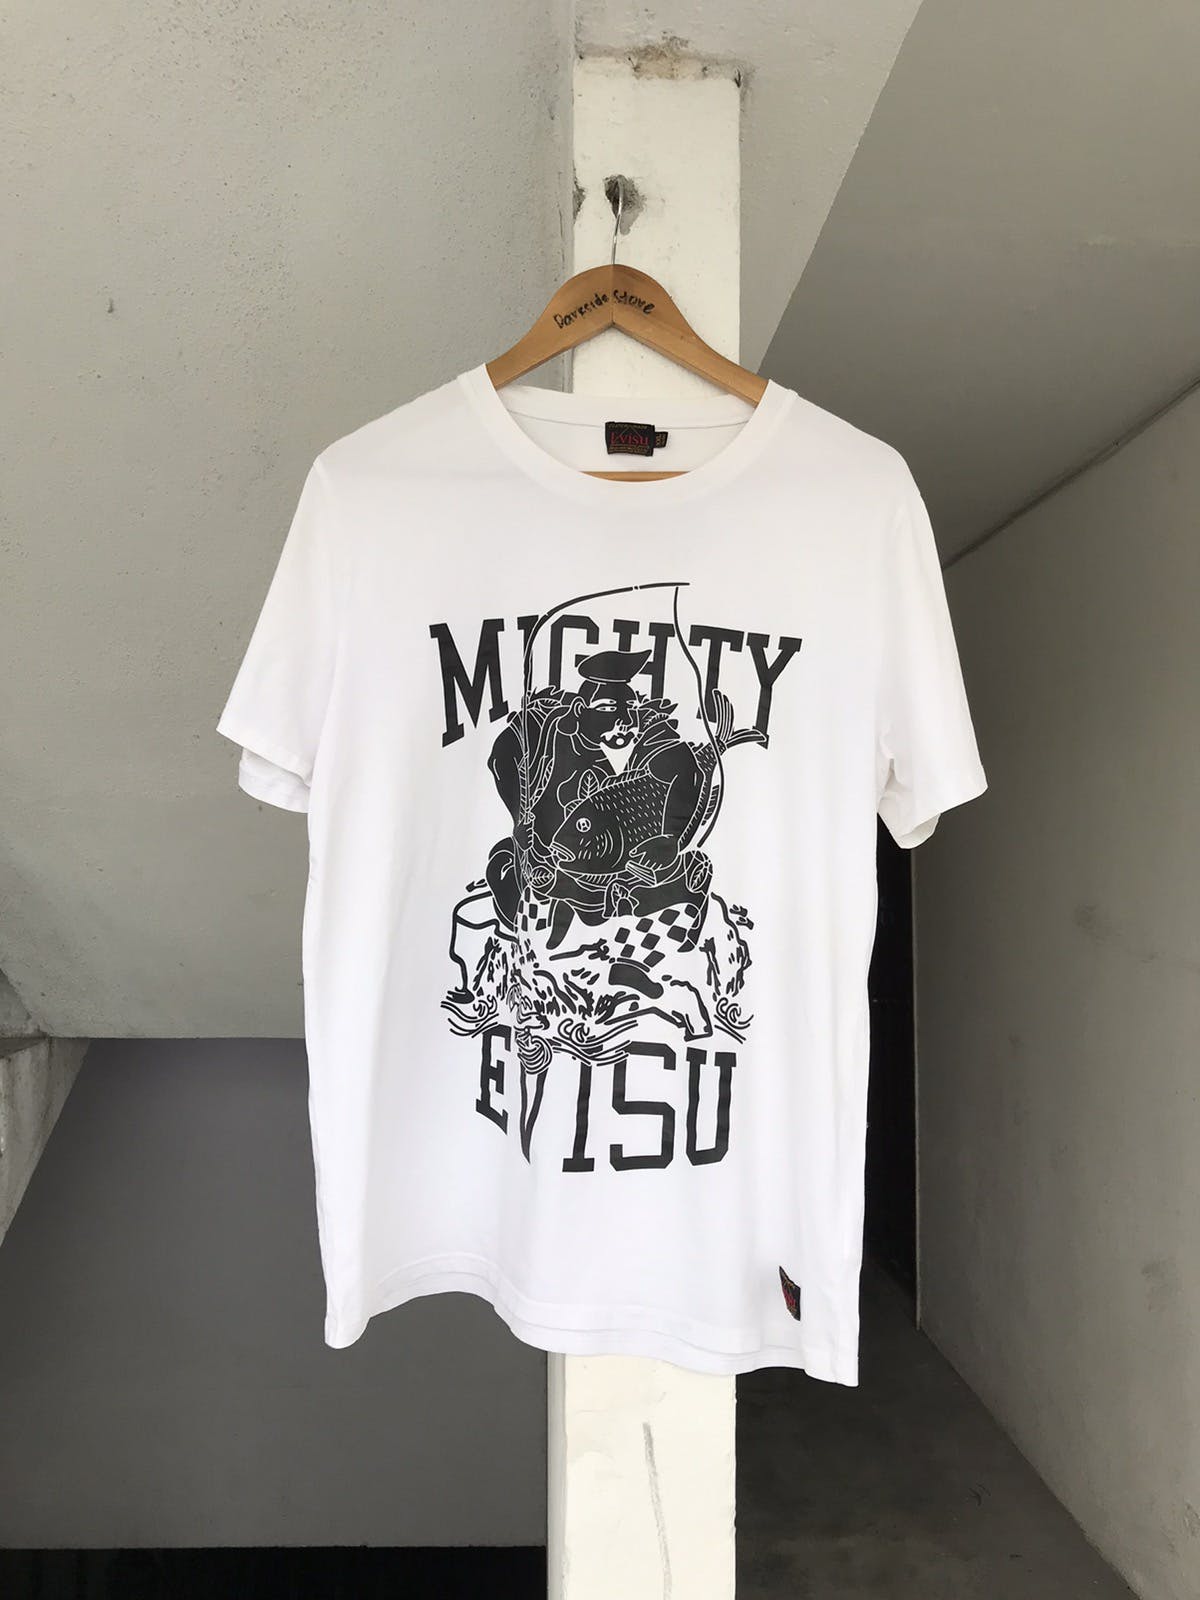 Mighty Evisu White tee - 4